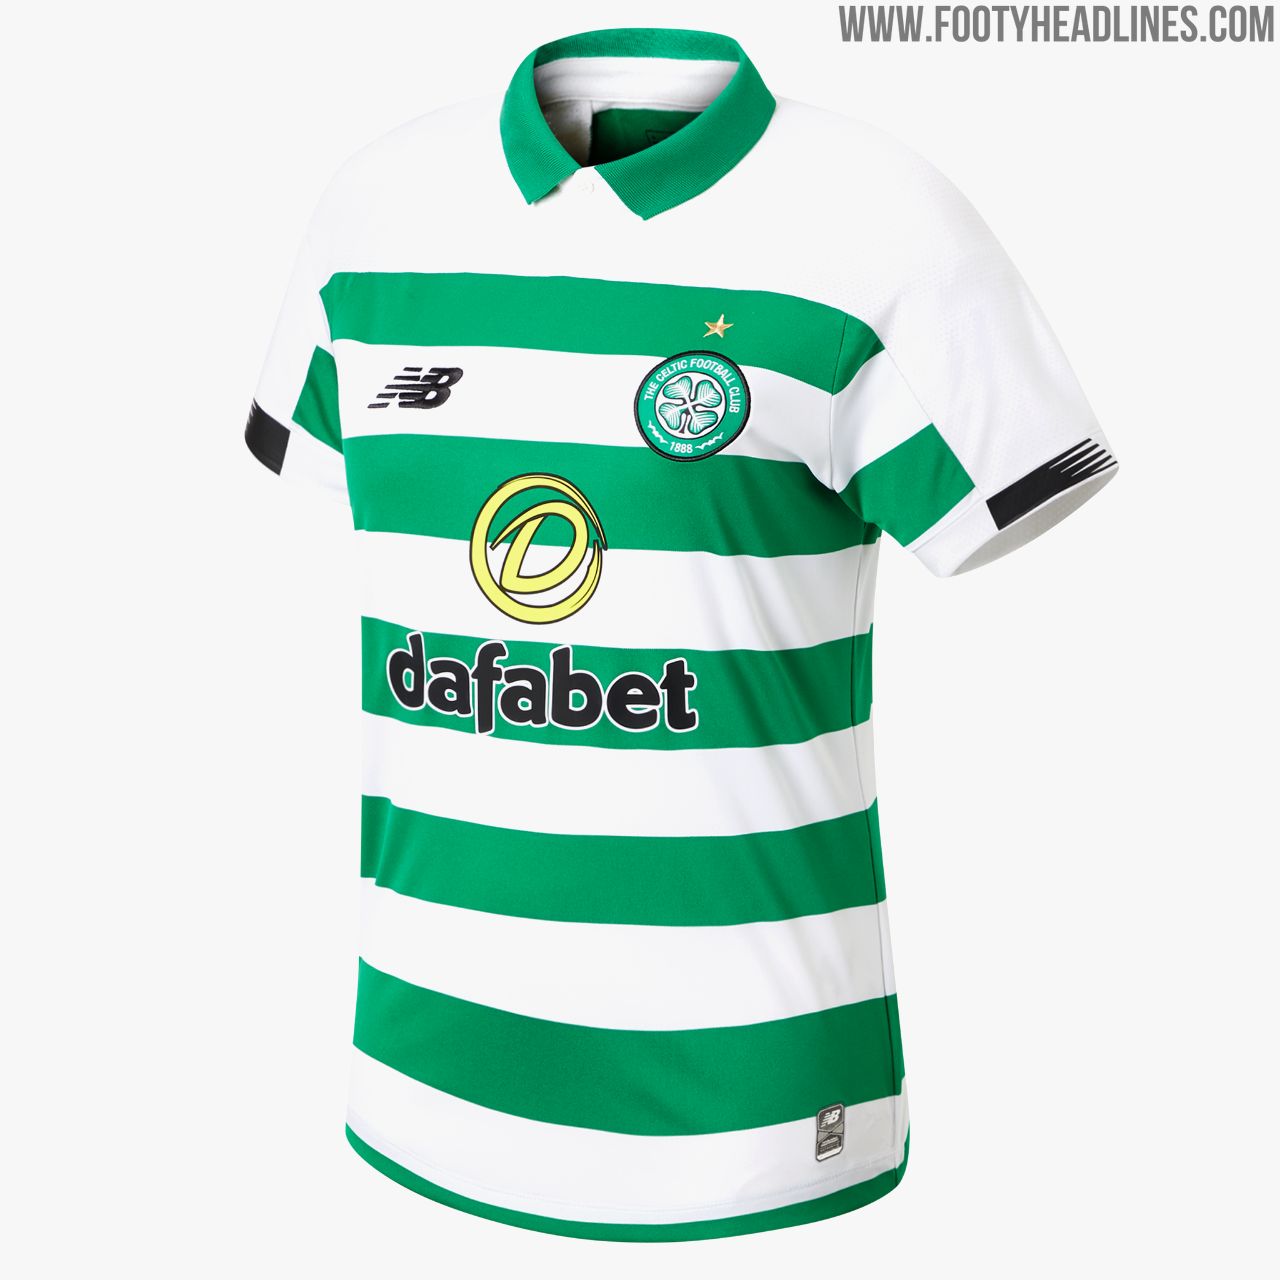 Celtic 19-20 Home Kit Revealed - Footy Headlines